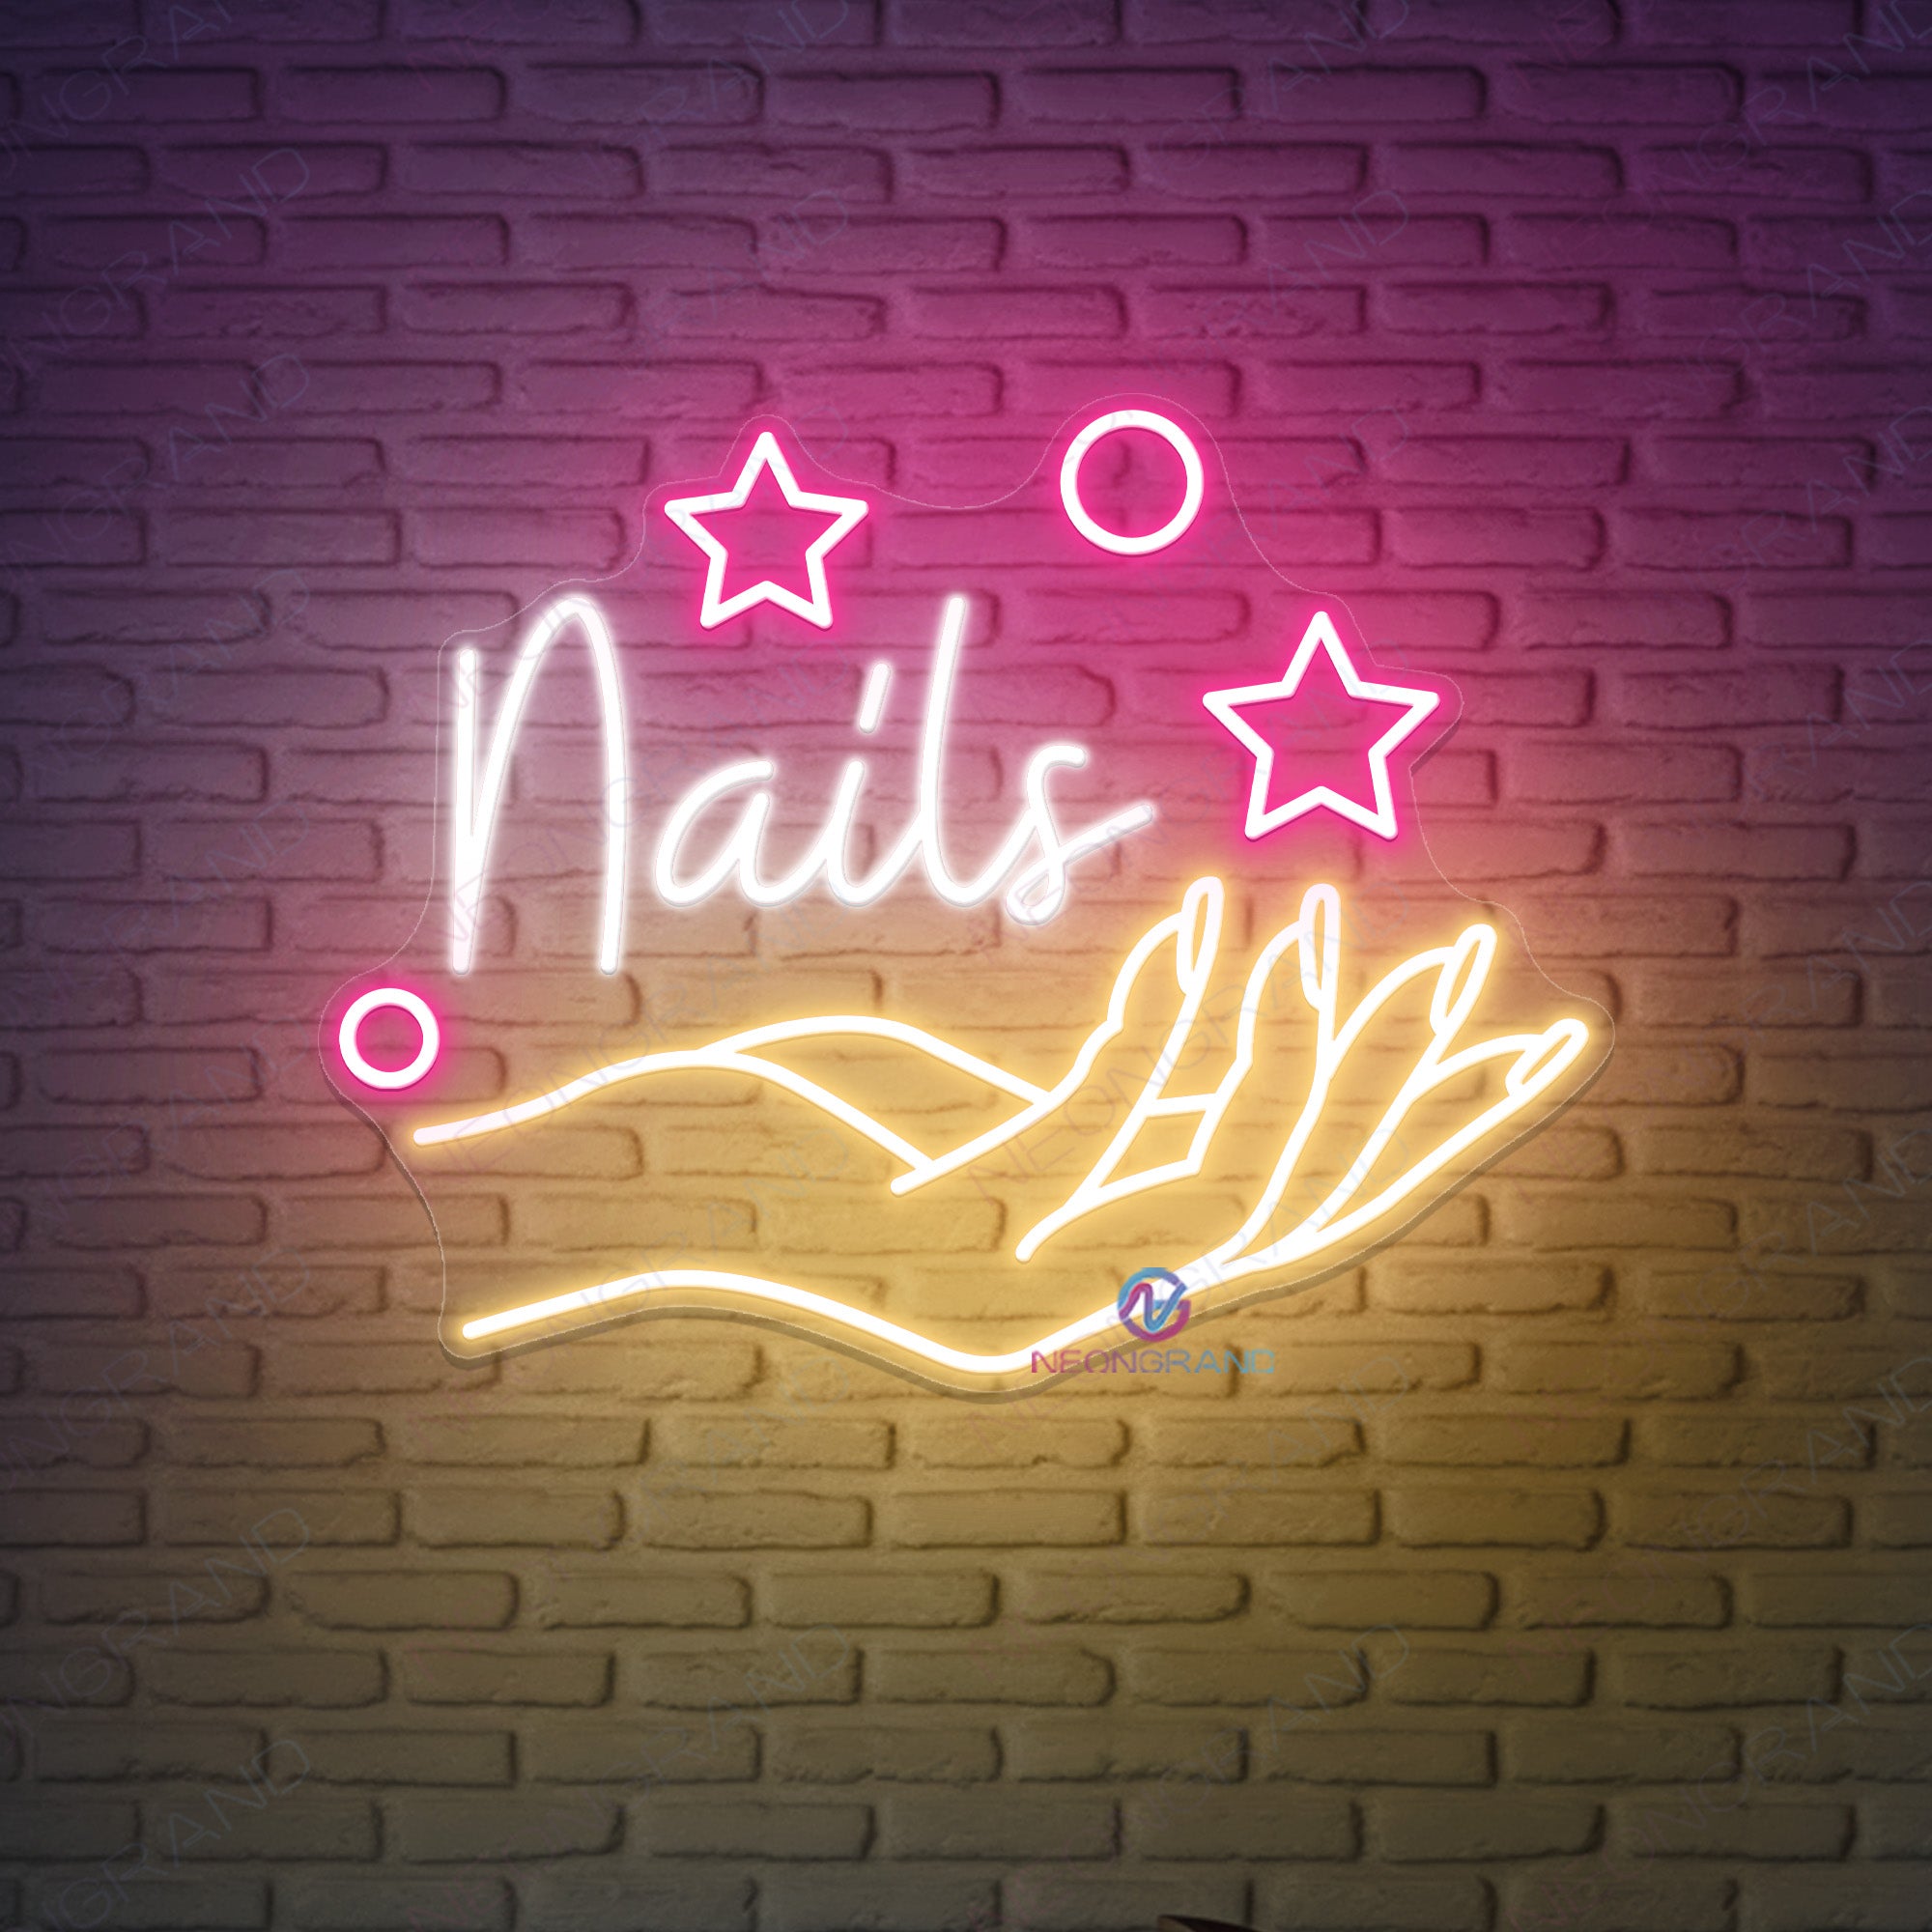 Nails Neon Sign Salon Led Light